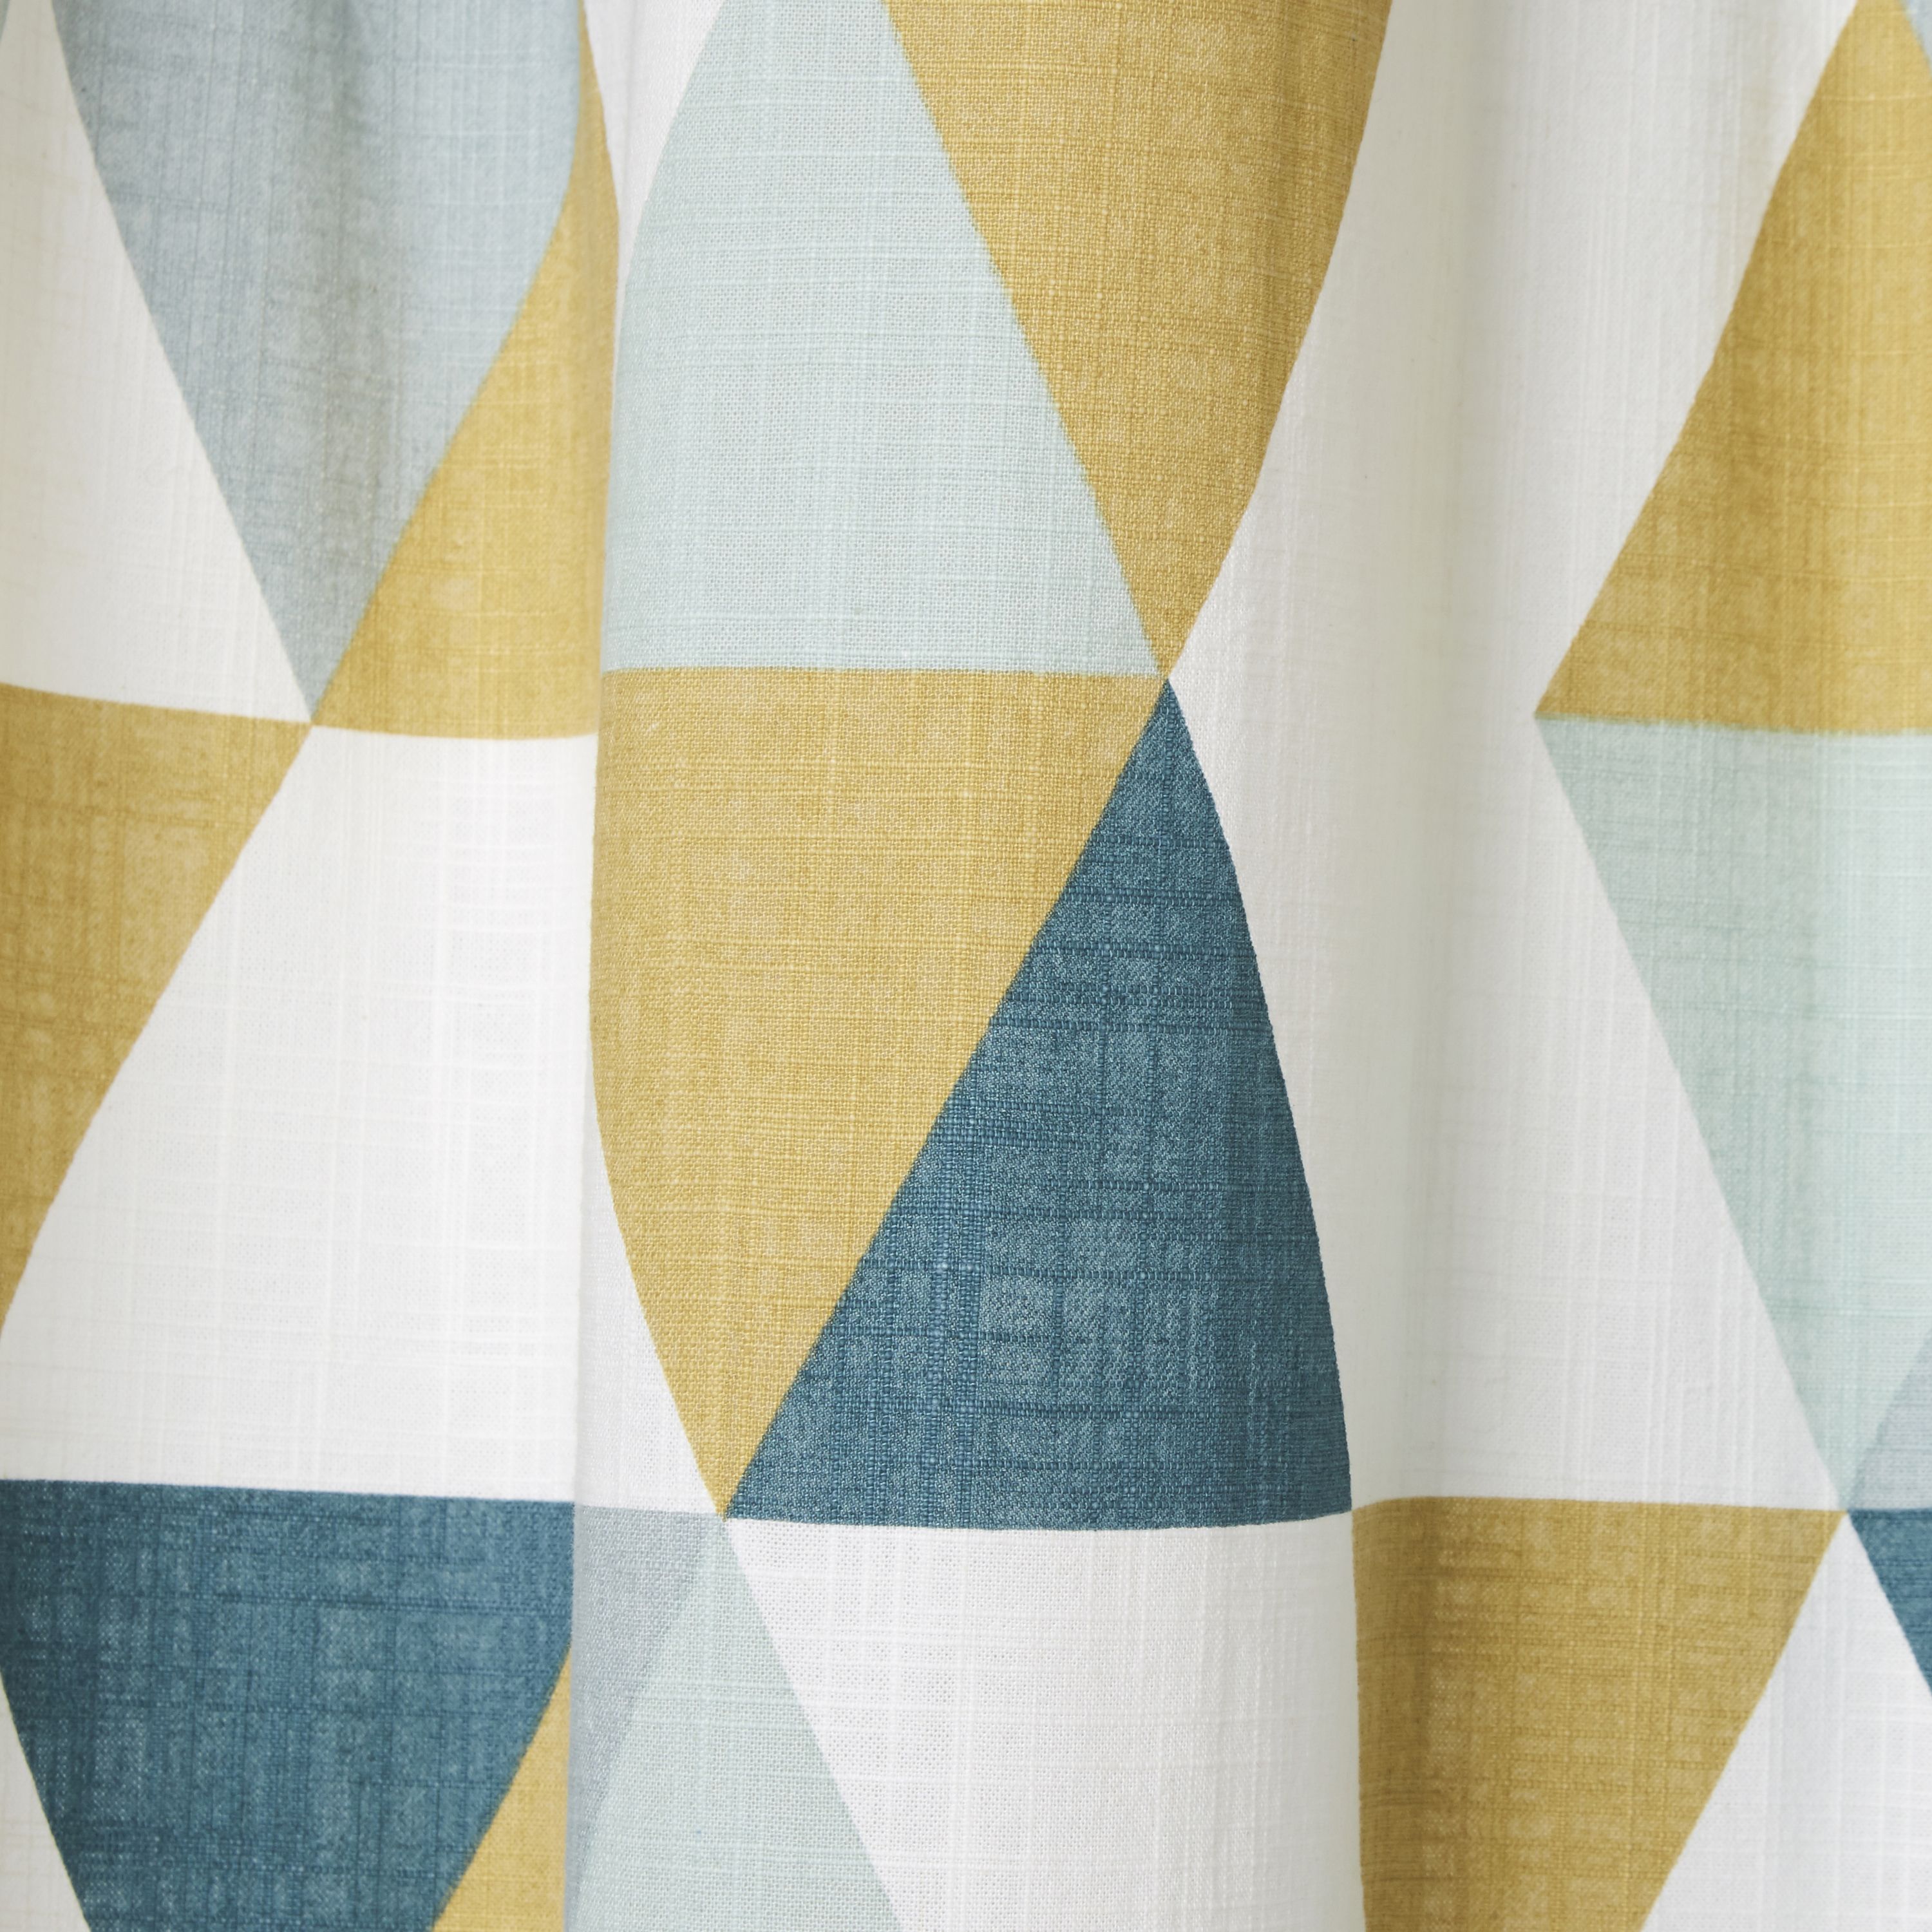 Rima Blue, grey & mustard Triangle Unlined Eyelet Curtain (W)167cm (L)228cm, Single